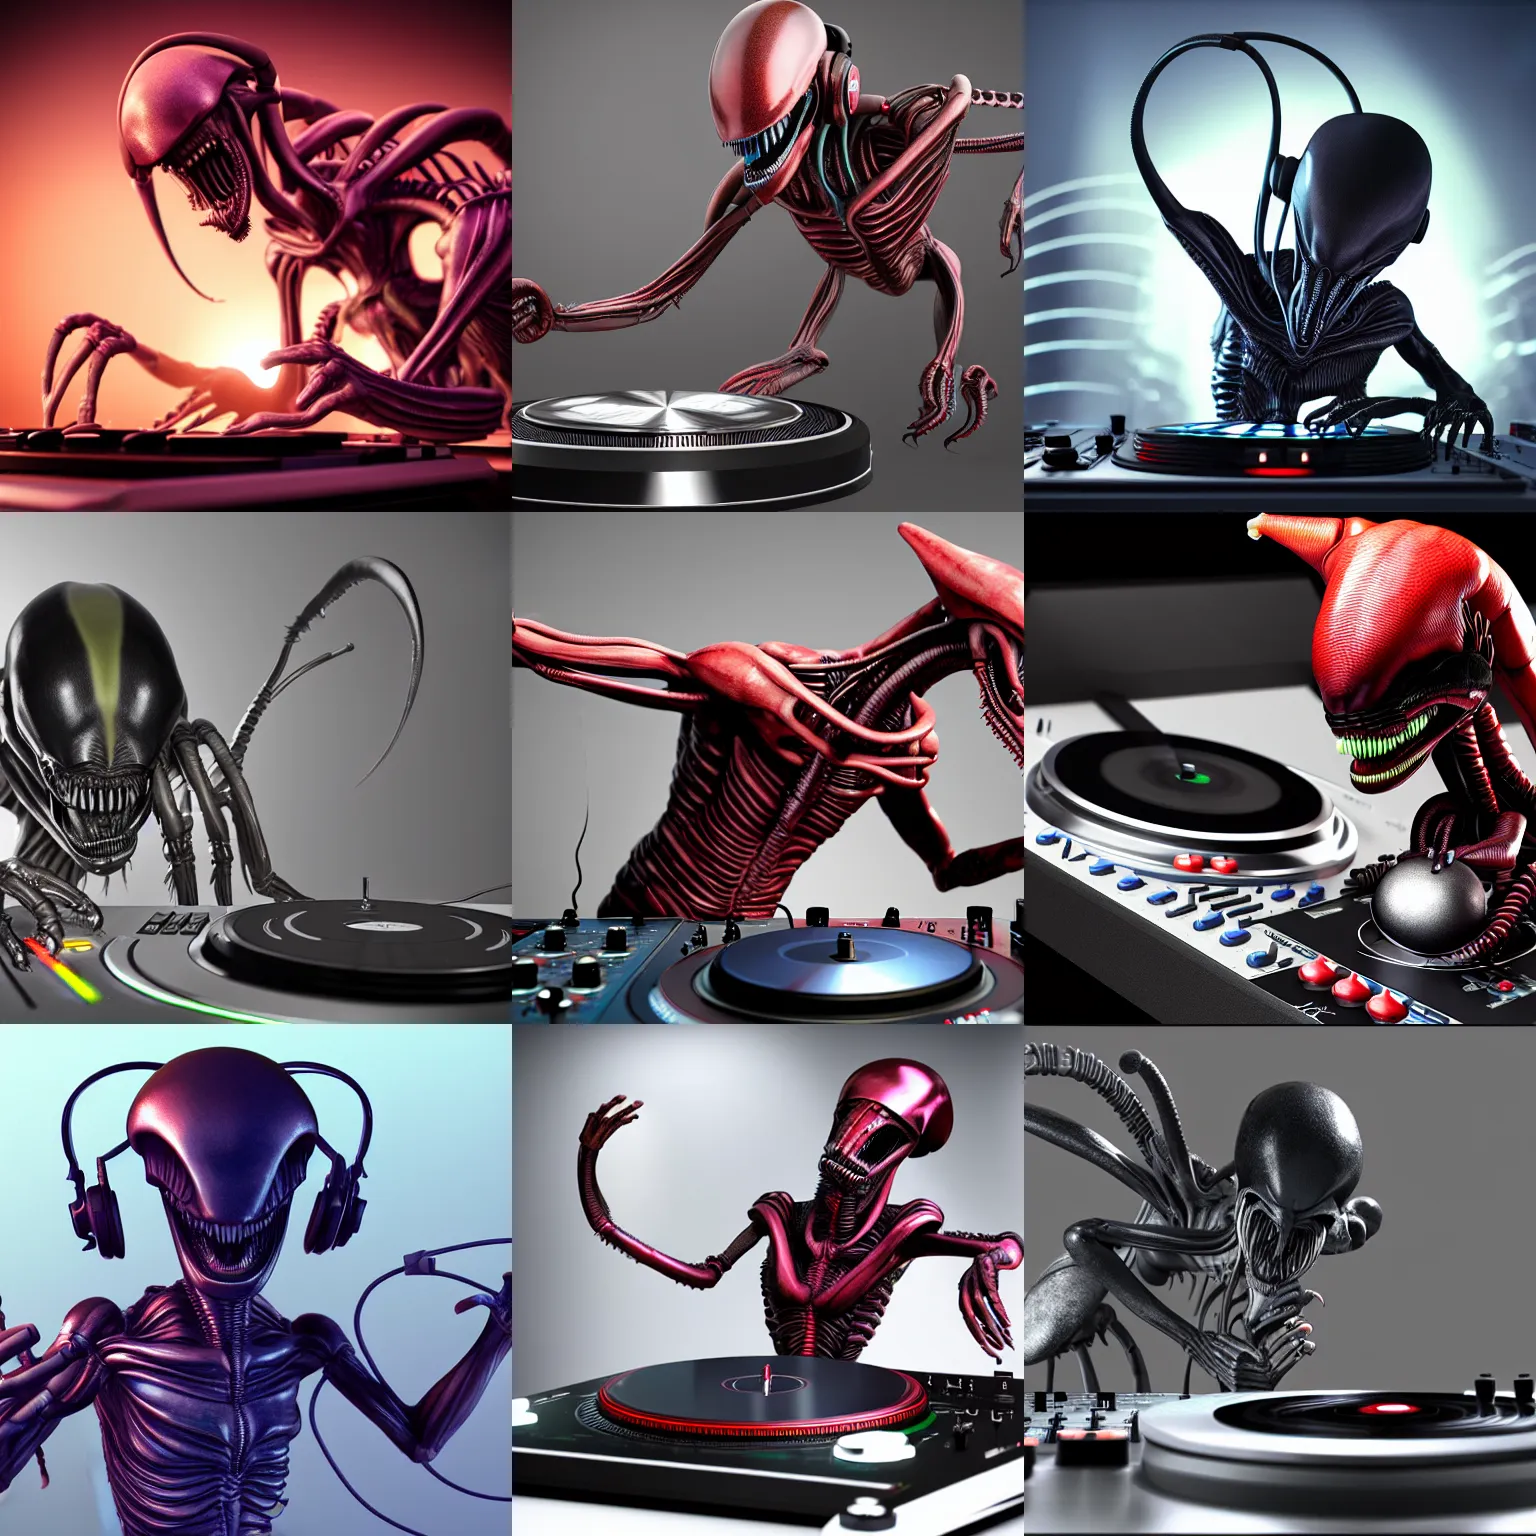 Prompt: 3d render of photoreal xenomorph alien with headphones DJing with DJ turntables, unreal